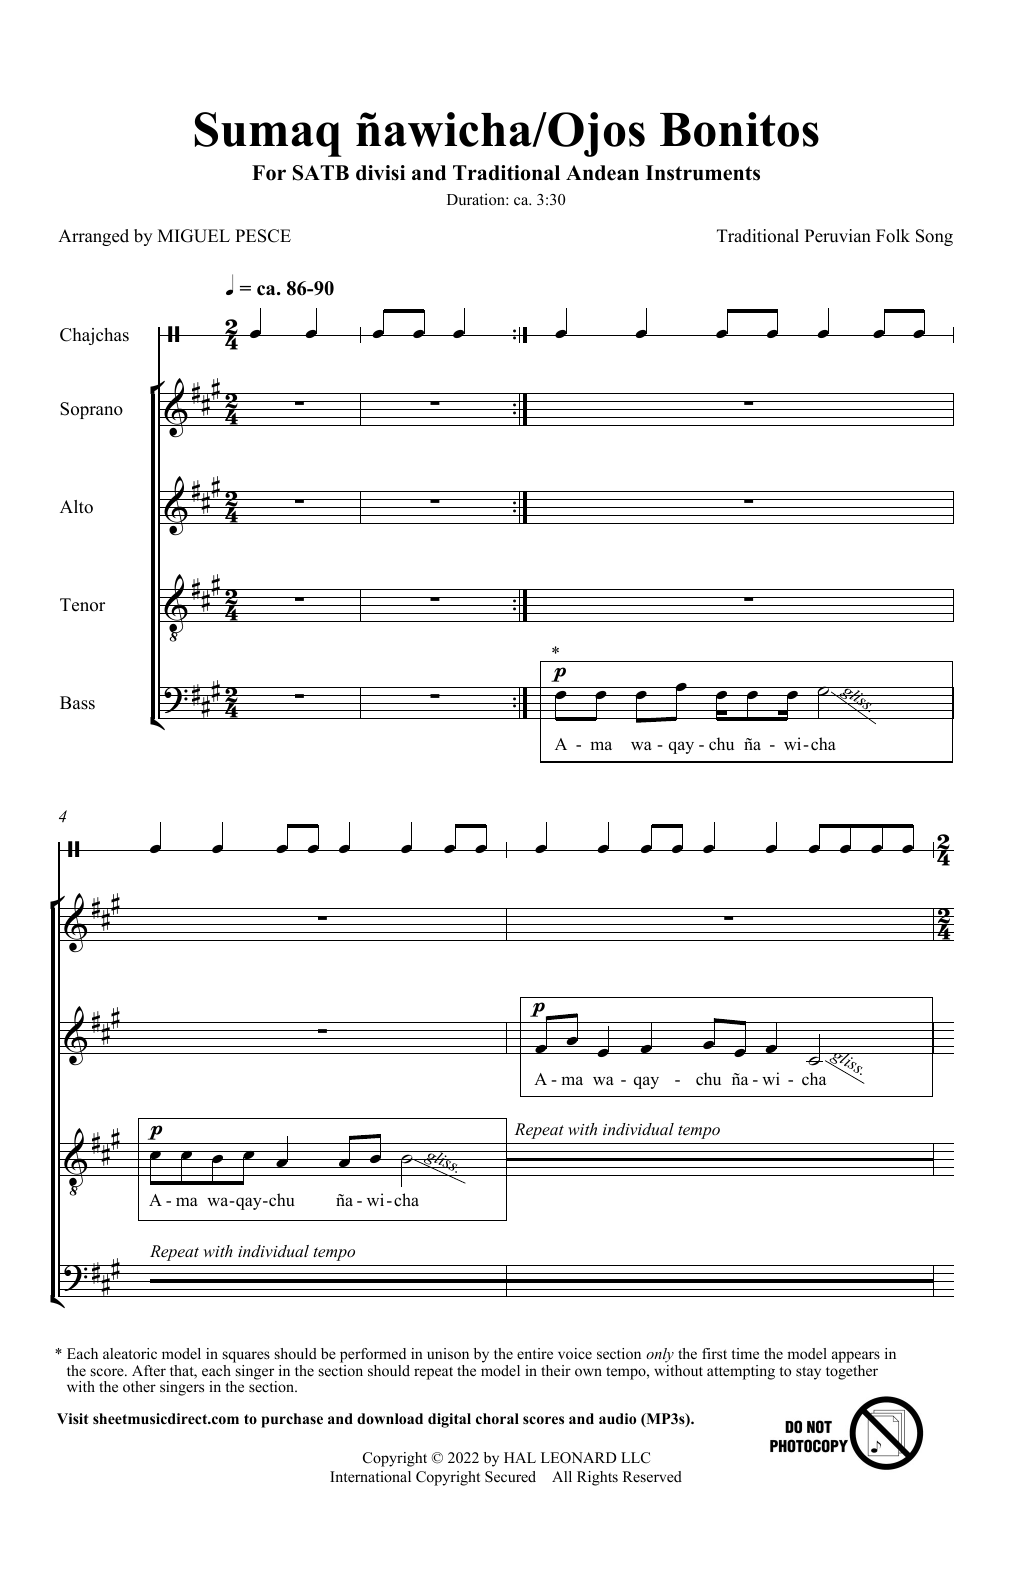 Traditional Peruvian Folk Song Sumaq Ñawicha/Ojos Bonitos (arr. Miguel Pesce) Sheet Music Notes & Chords for Choir - Download or Print PDF